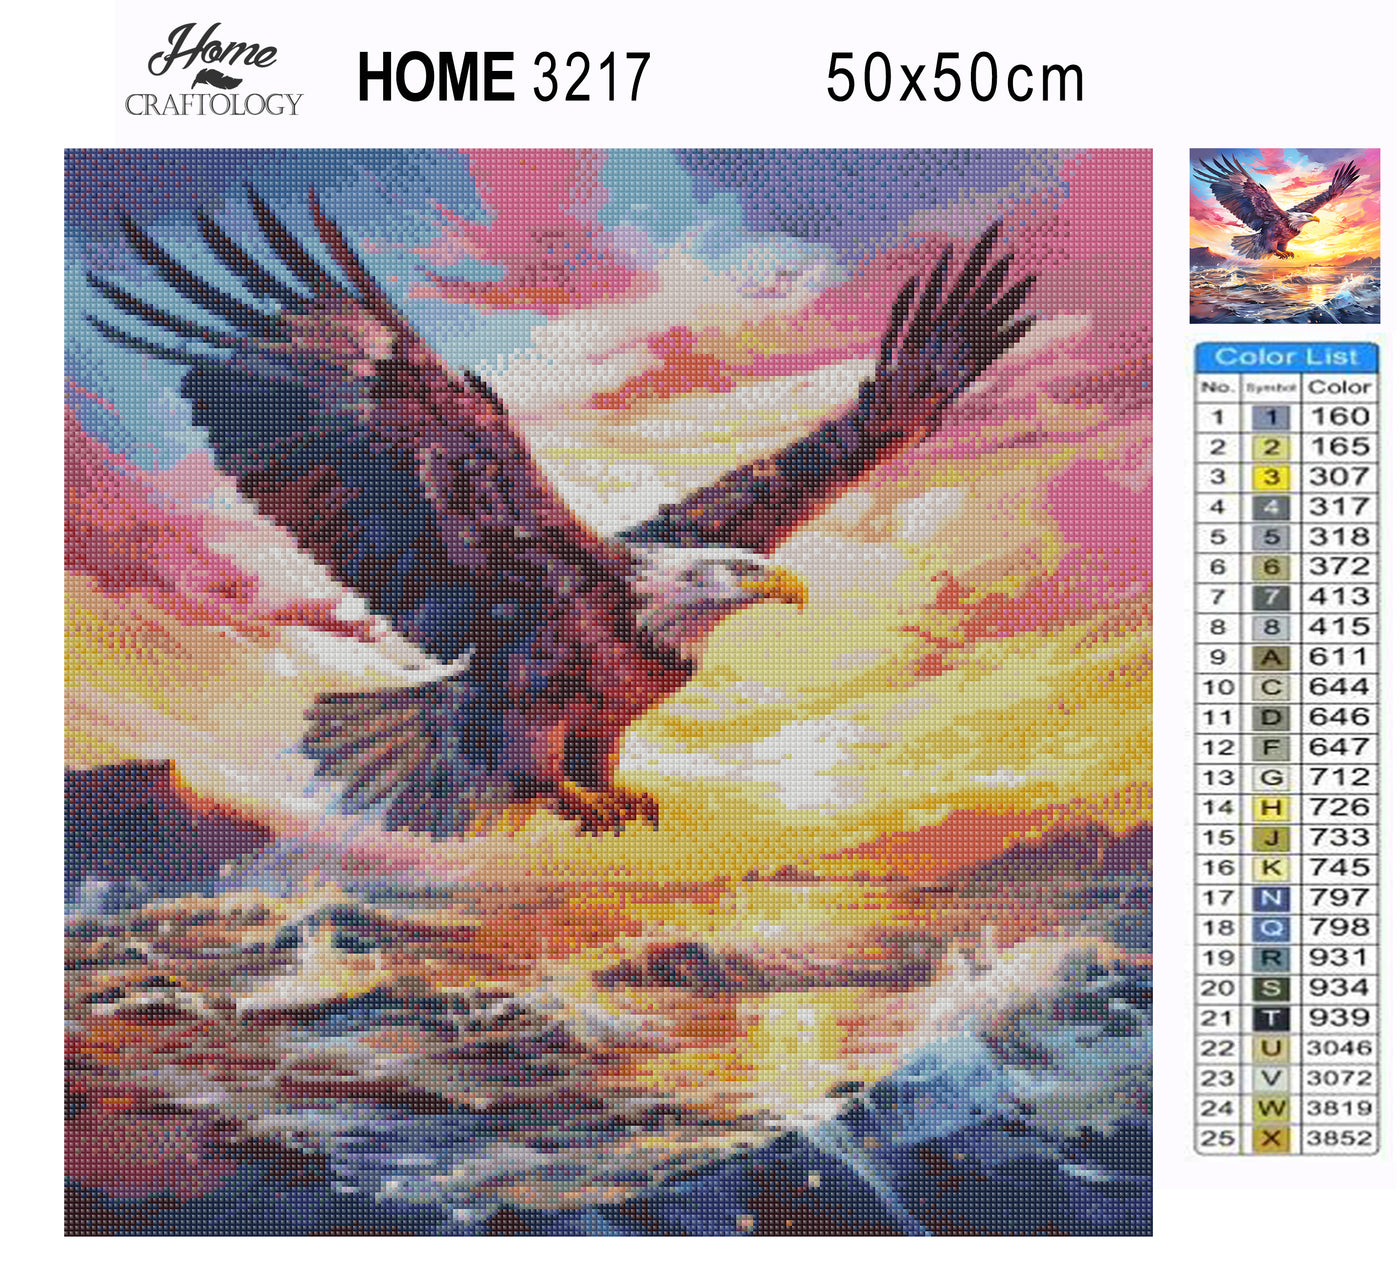 New! Eagle During Sunset - Premium Diamond Painting Kit